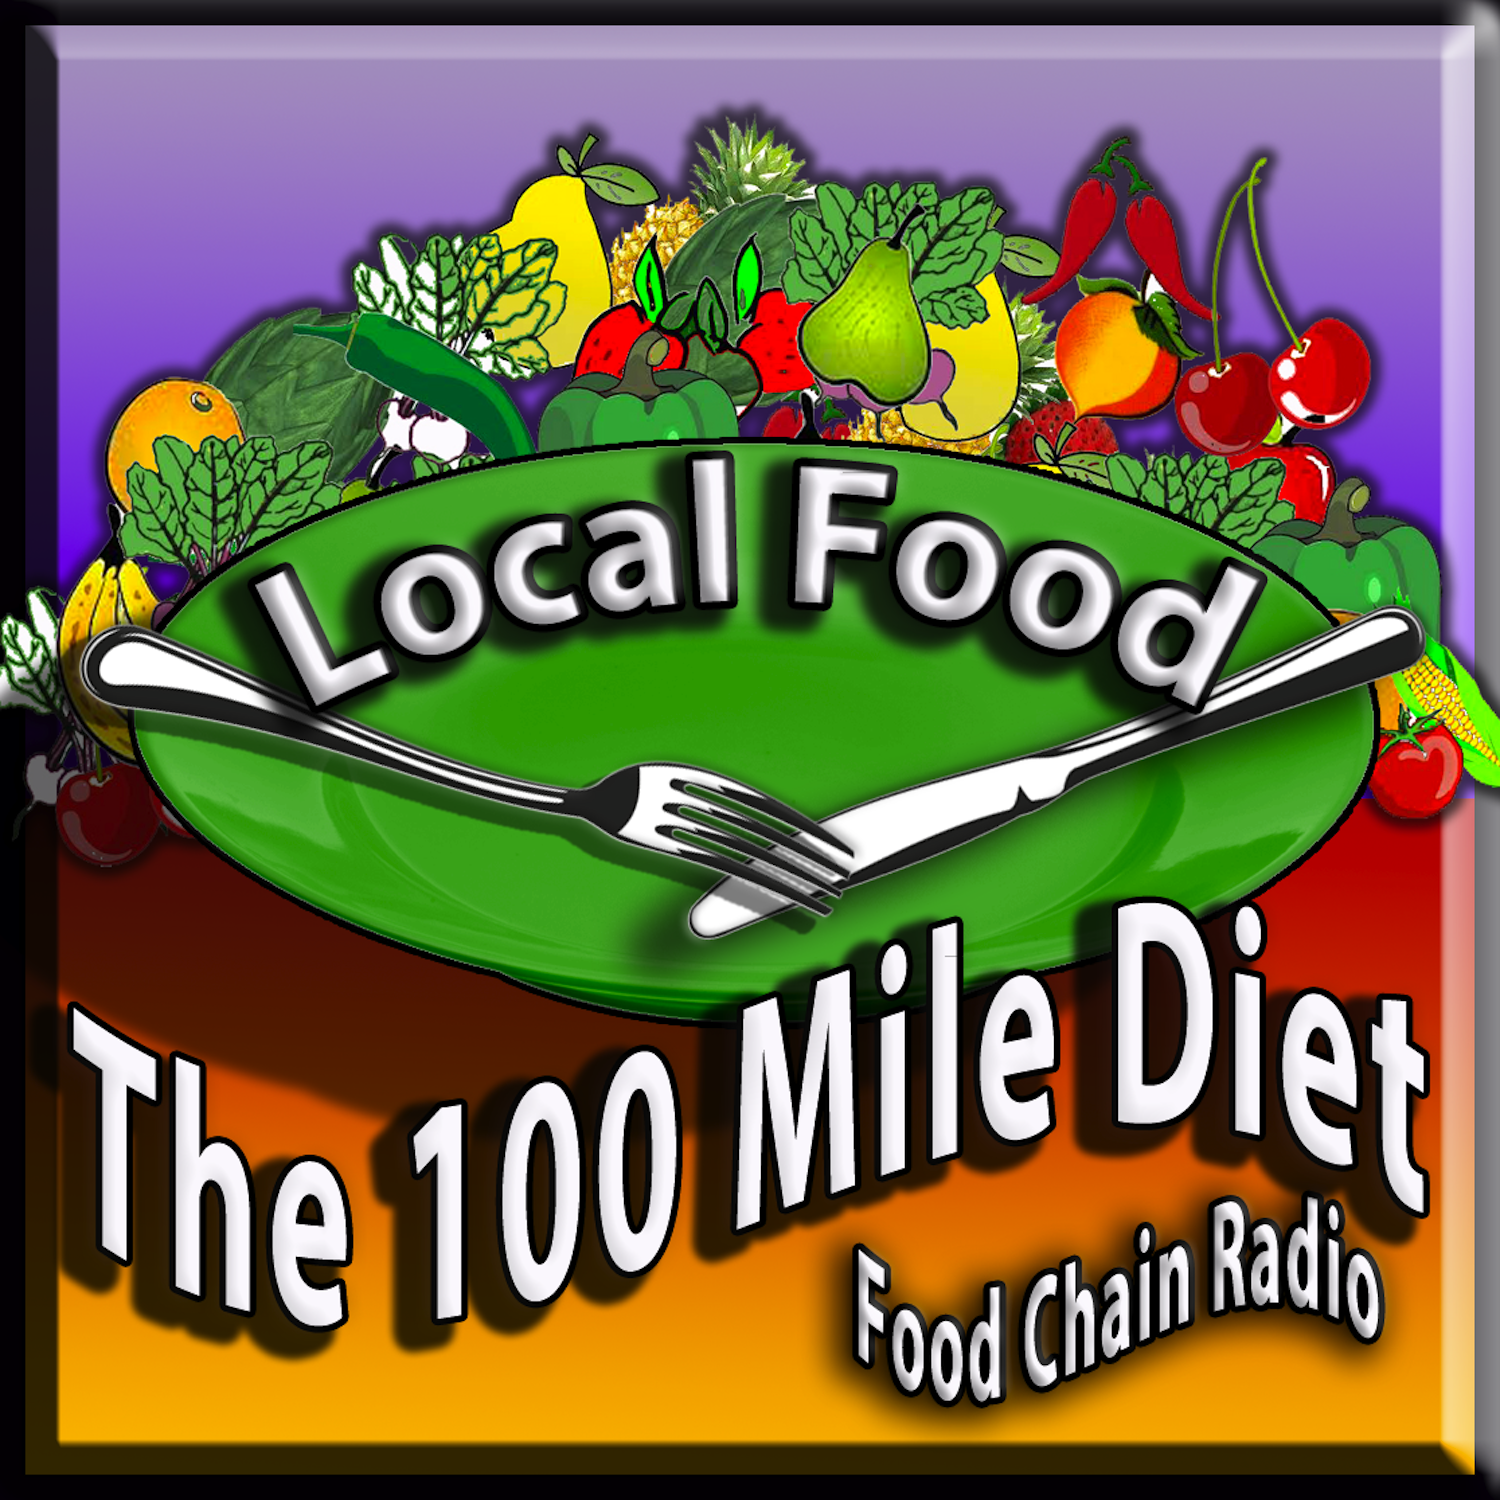 Michael Olson Food Chain Radio – Local Food